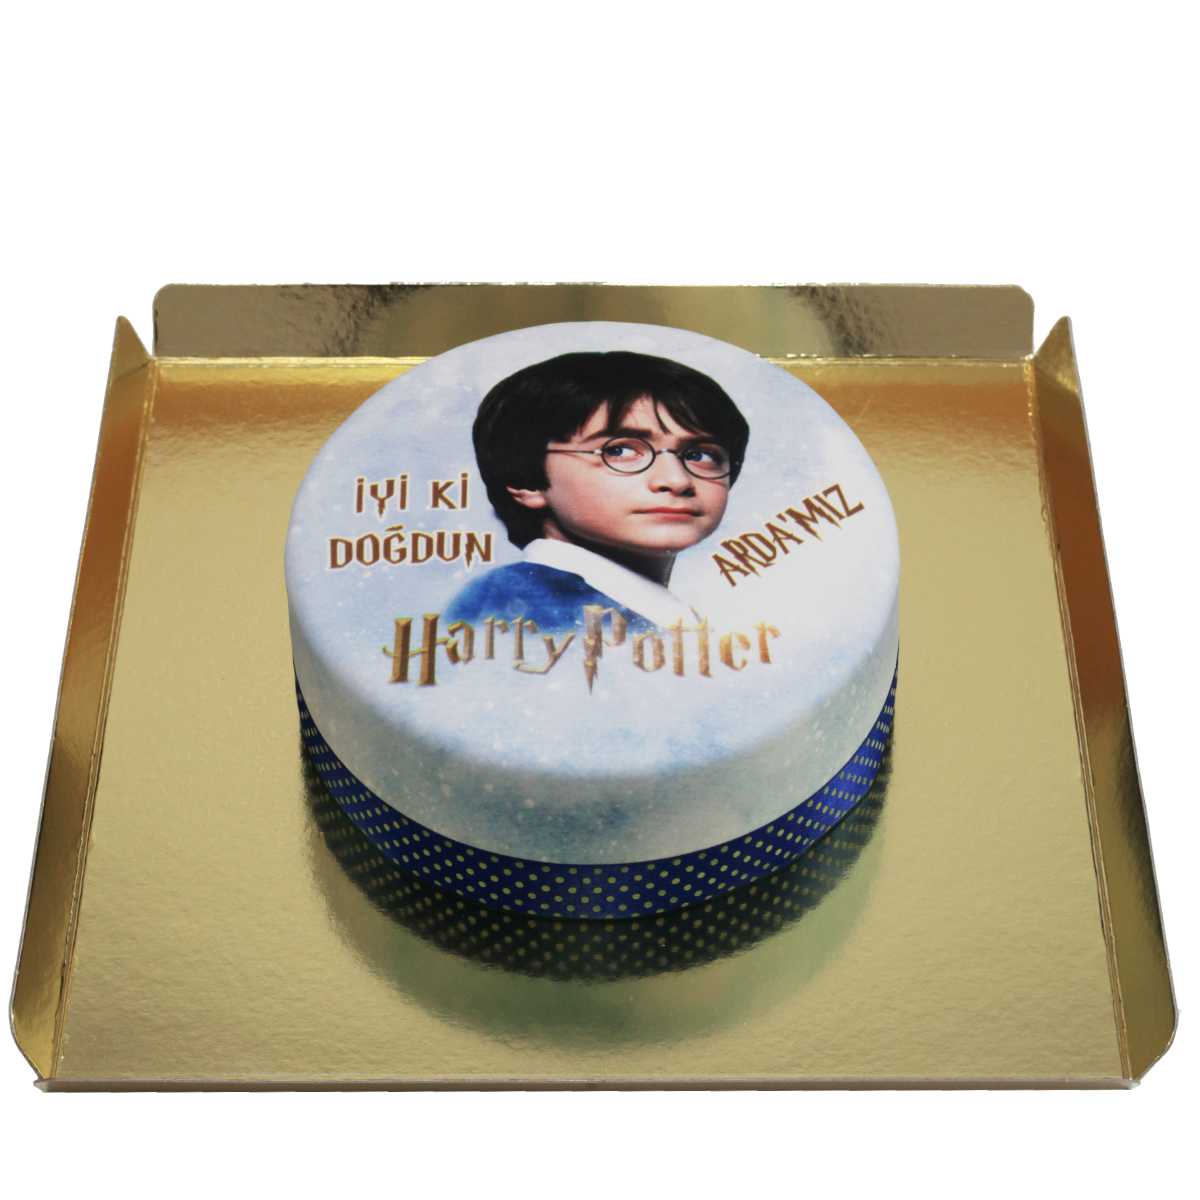 Harry Potter pasta